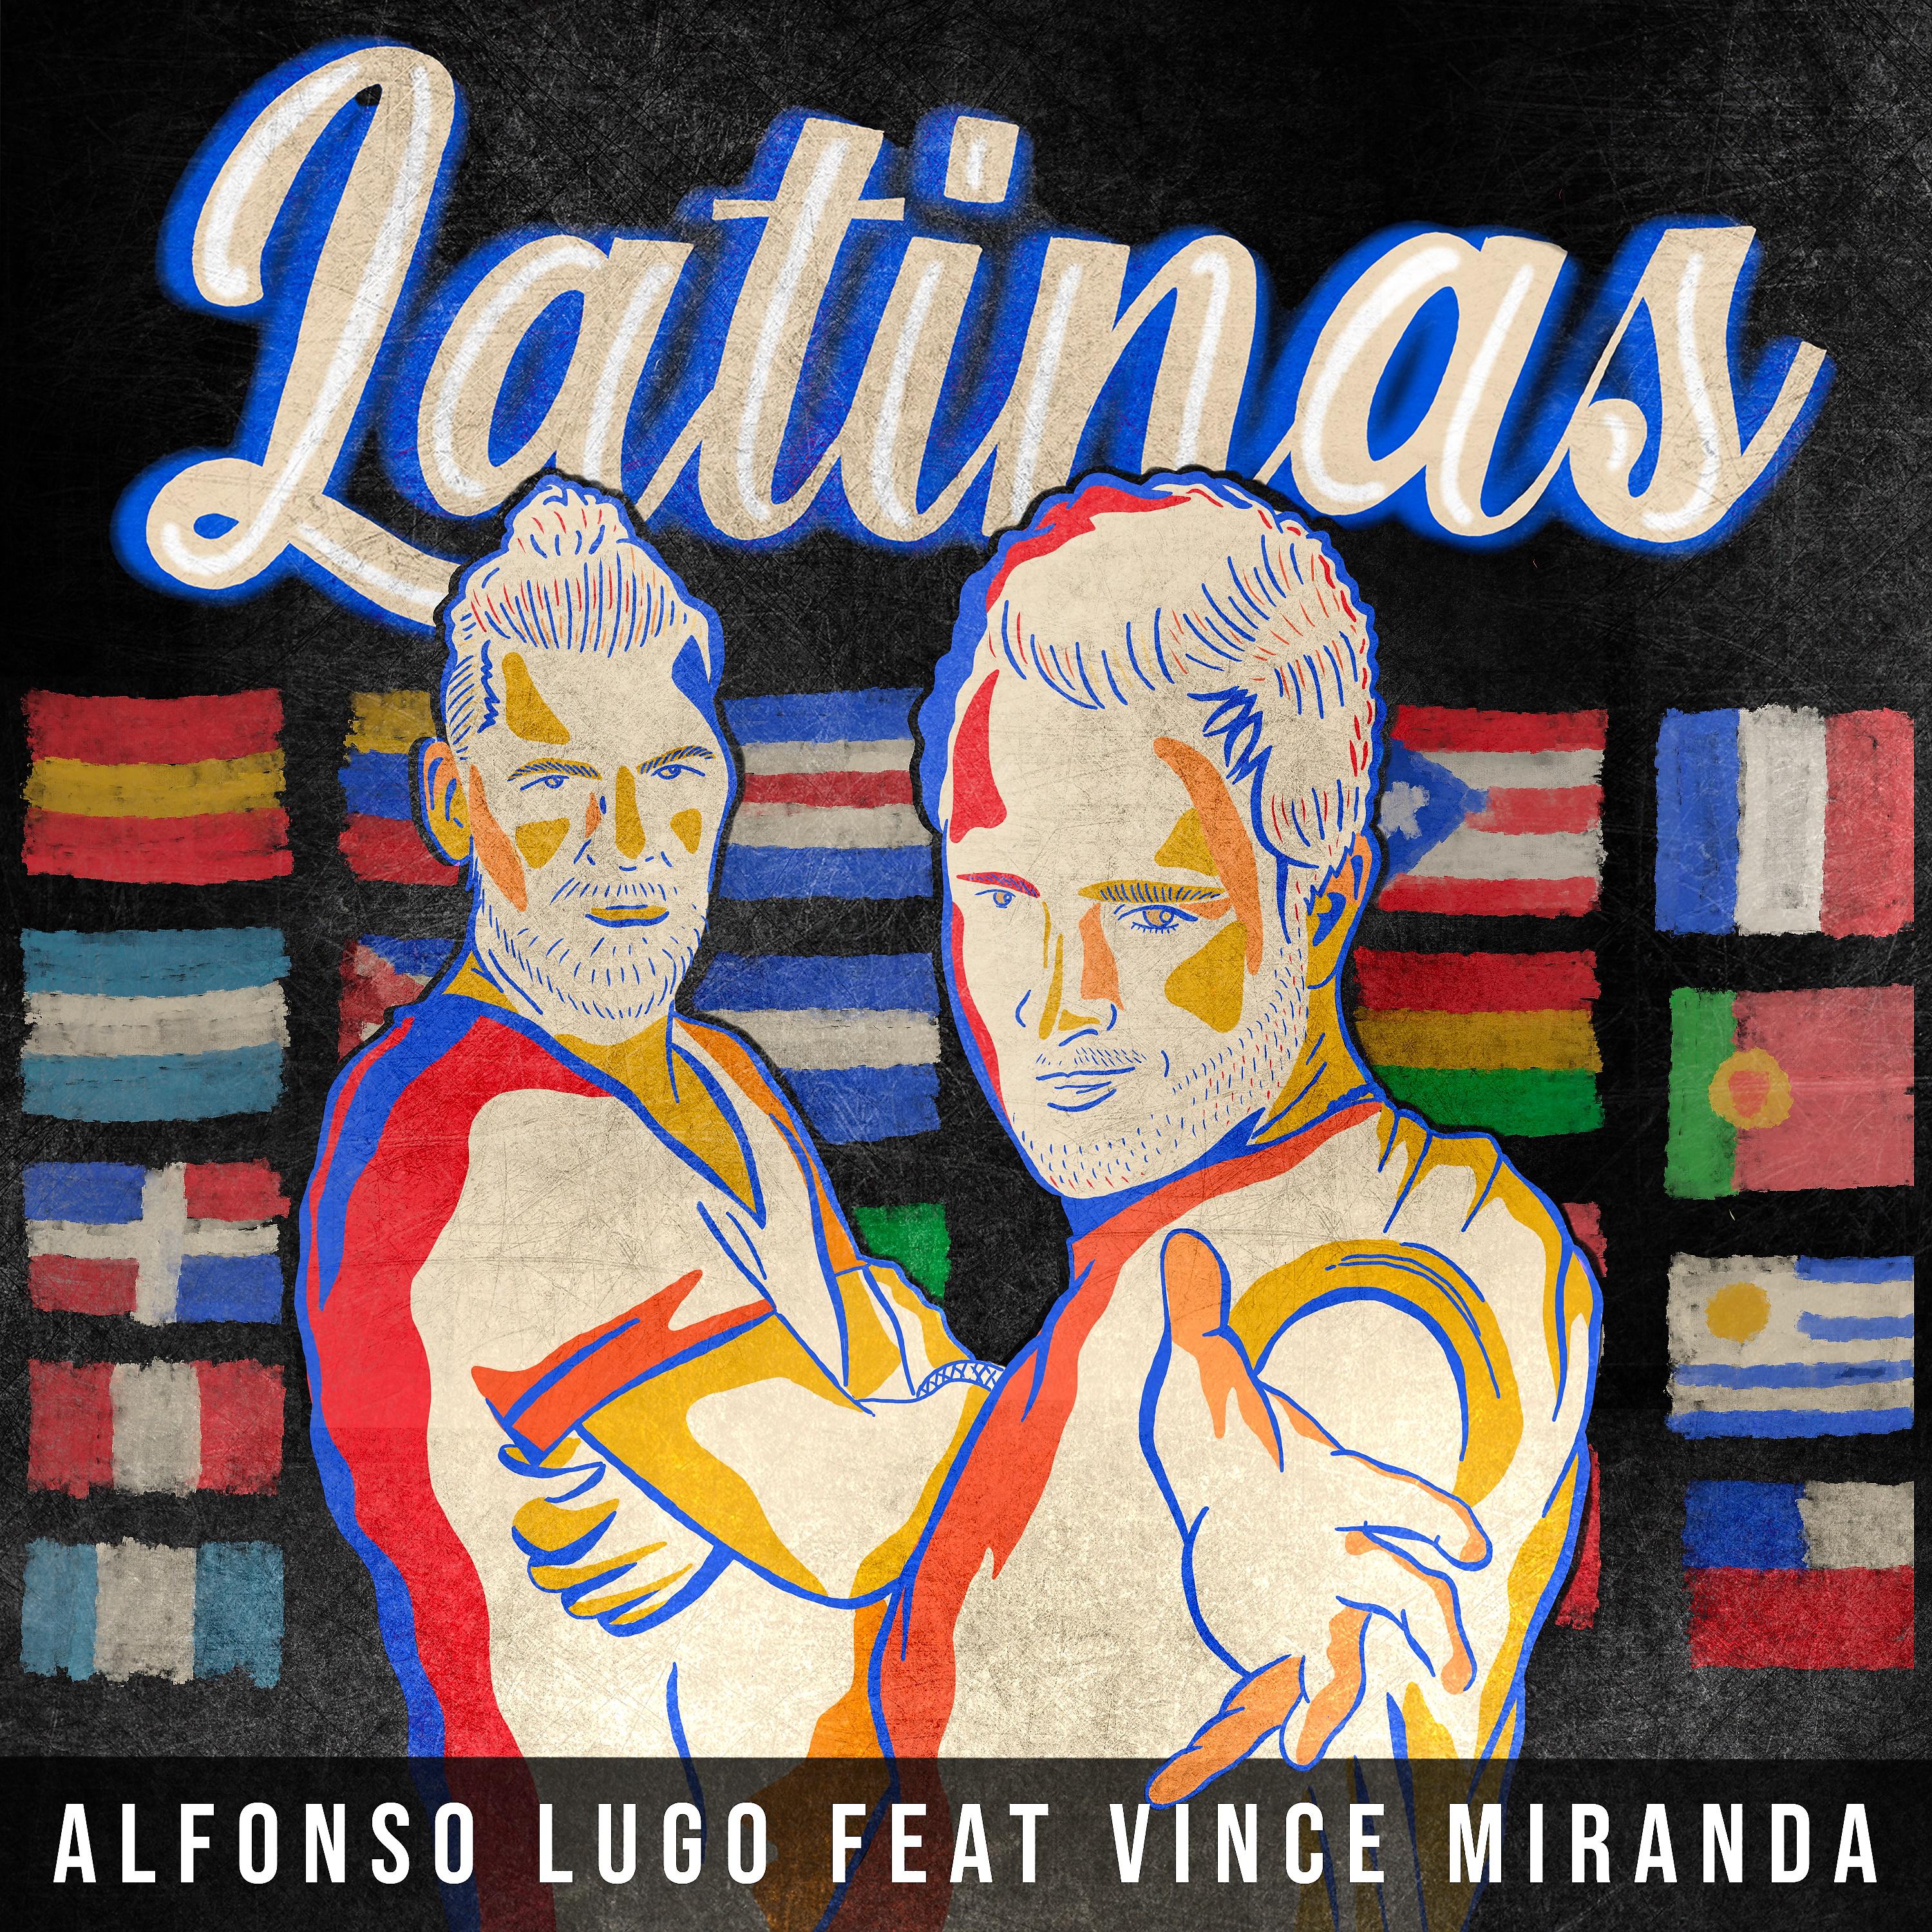 Постер альбома Latinas